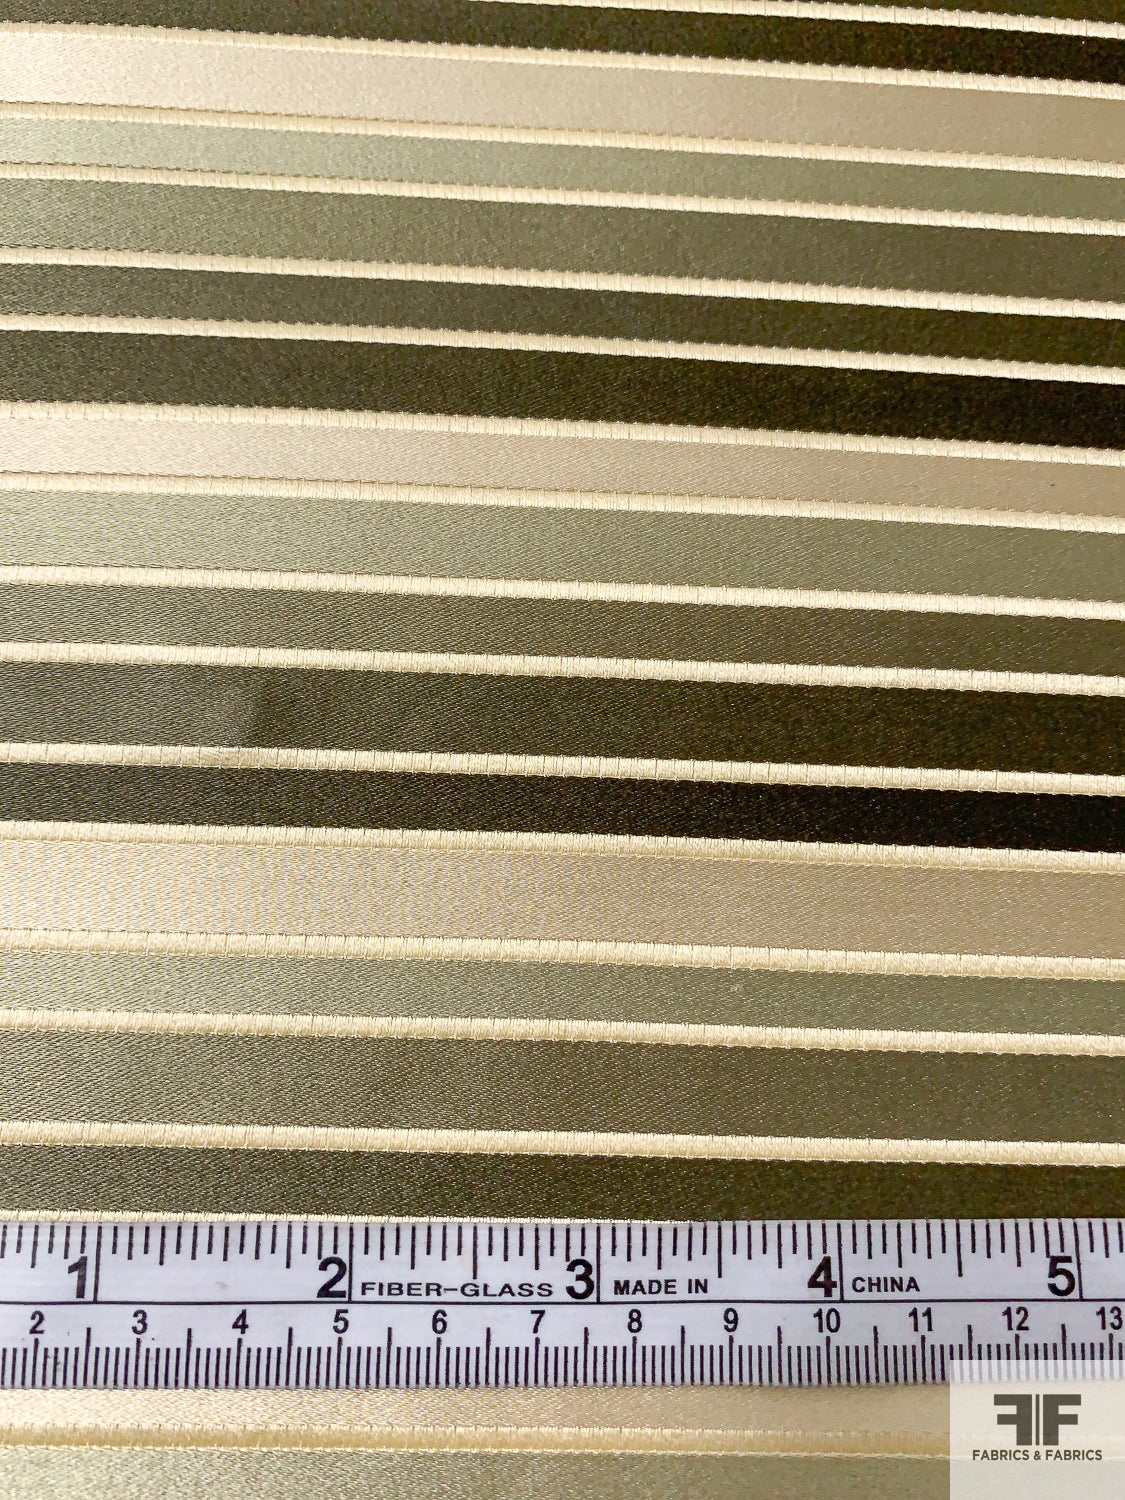 Horizontal Striped Silk Necktie Jacquard Brocade - Olive Greens / Beige / Light Gold